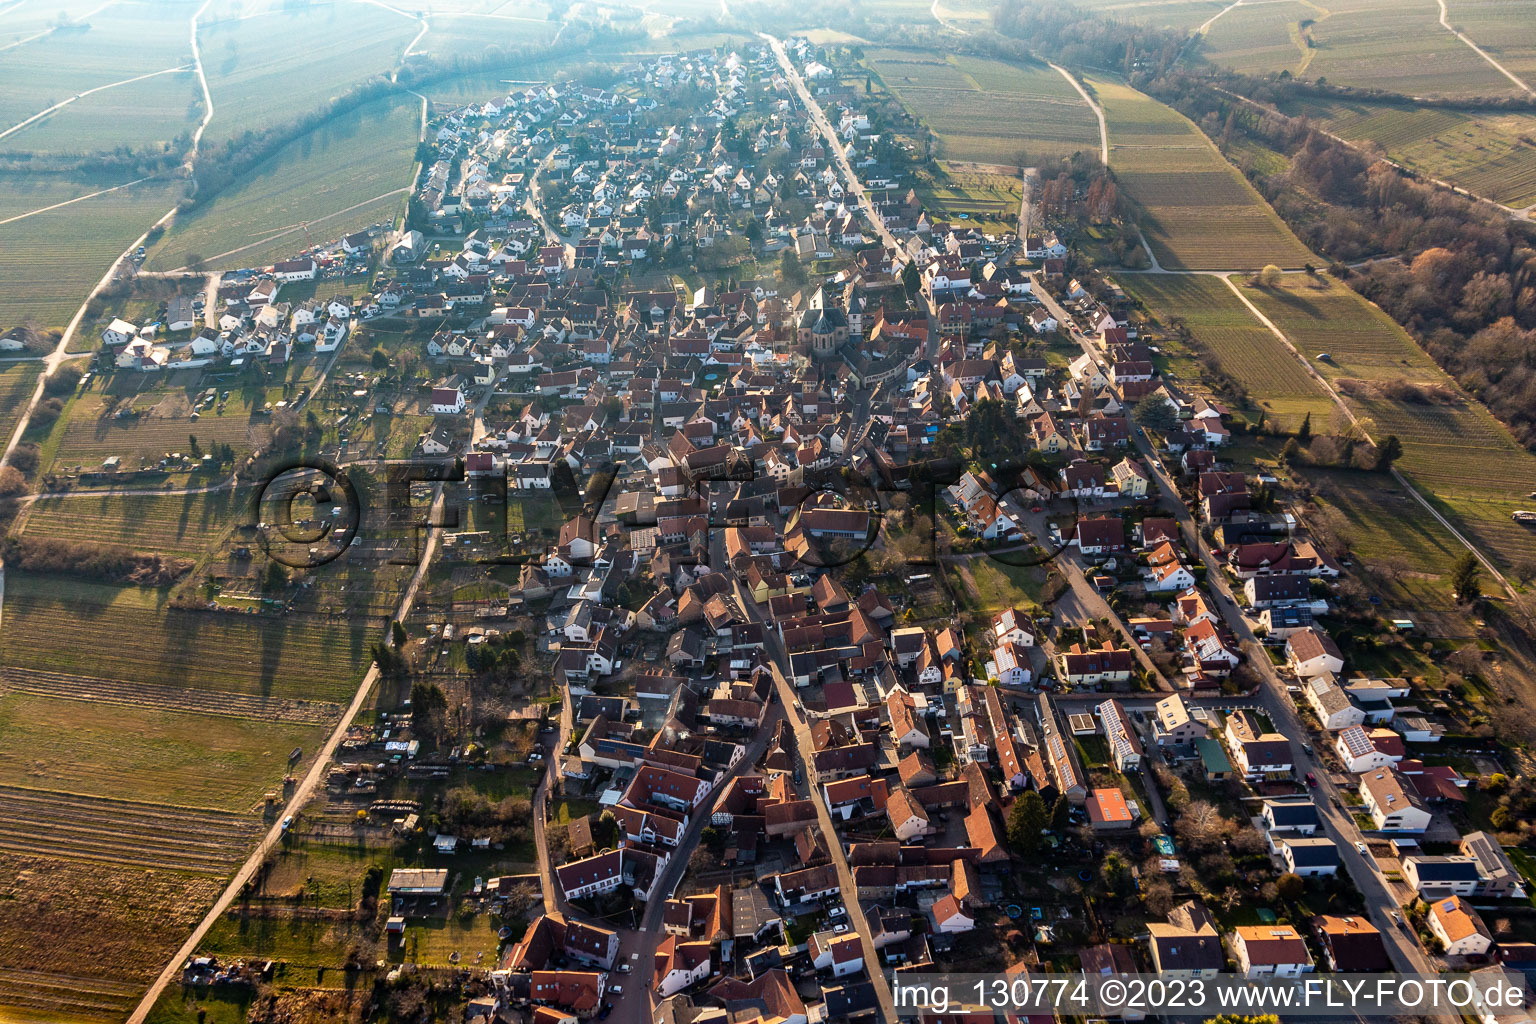 District Arzheim in Landau in der Pfalz in the state Rhineland-Palatinate, Germany seen from a drone